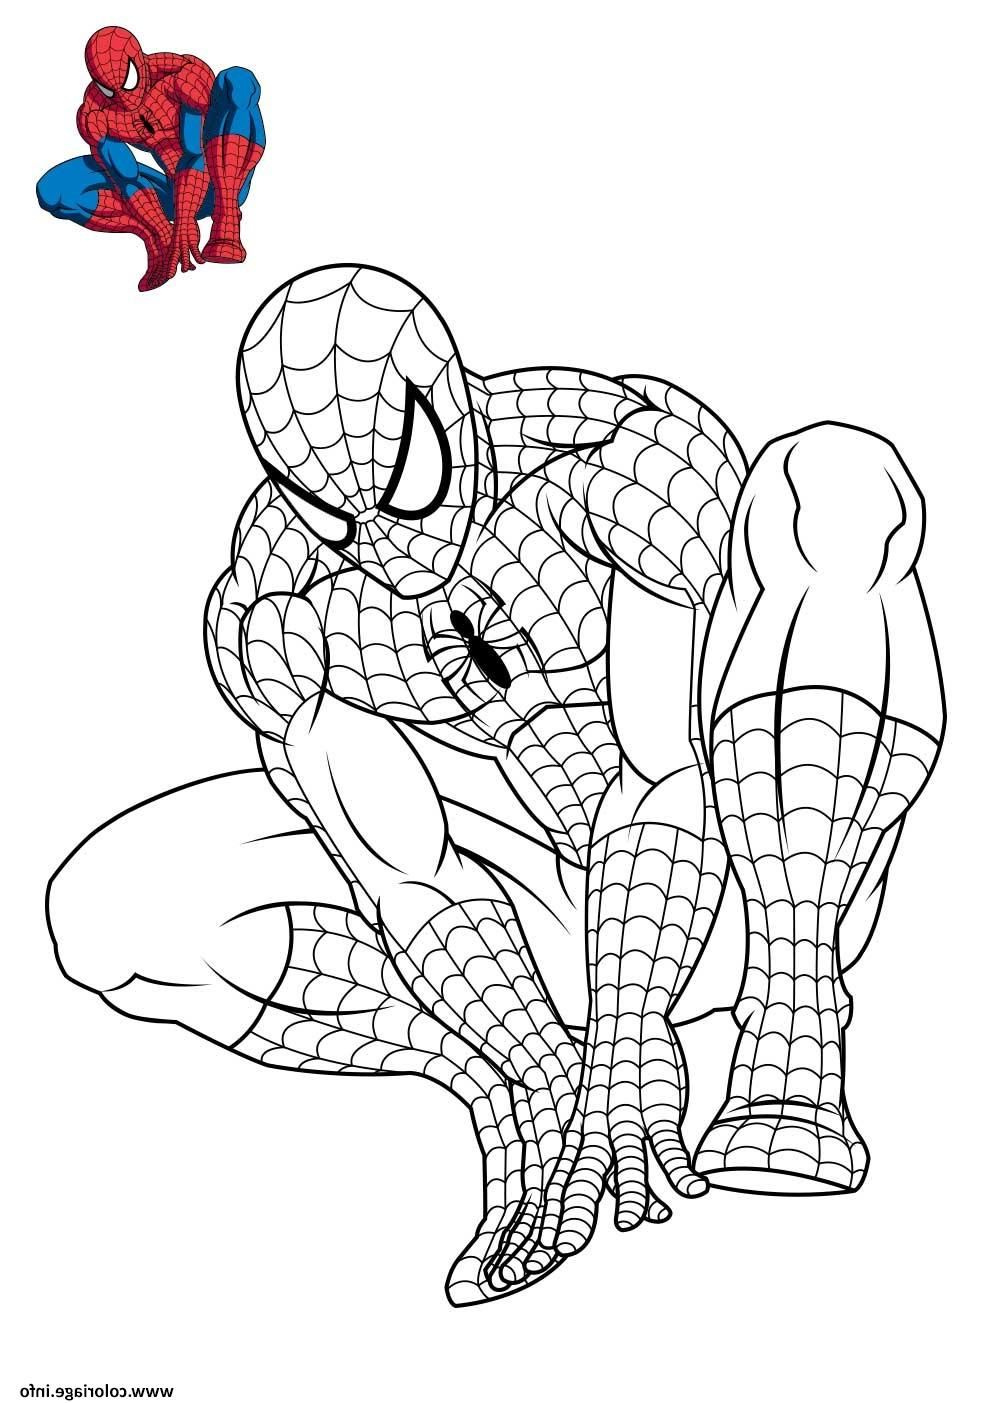 Dessin Spiderman à Imprimer Cool Galerie Coloriage Spiderman 3 En Reflexion Dessin à Imprimer